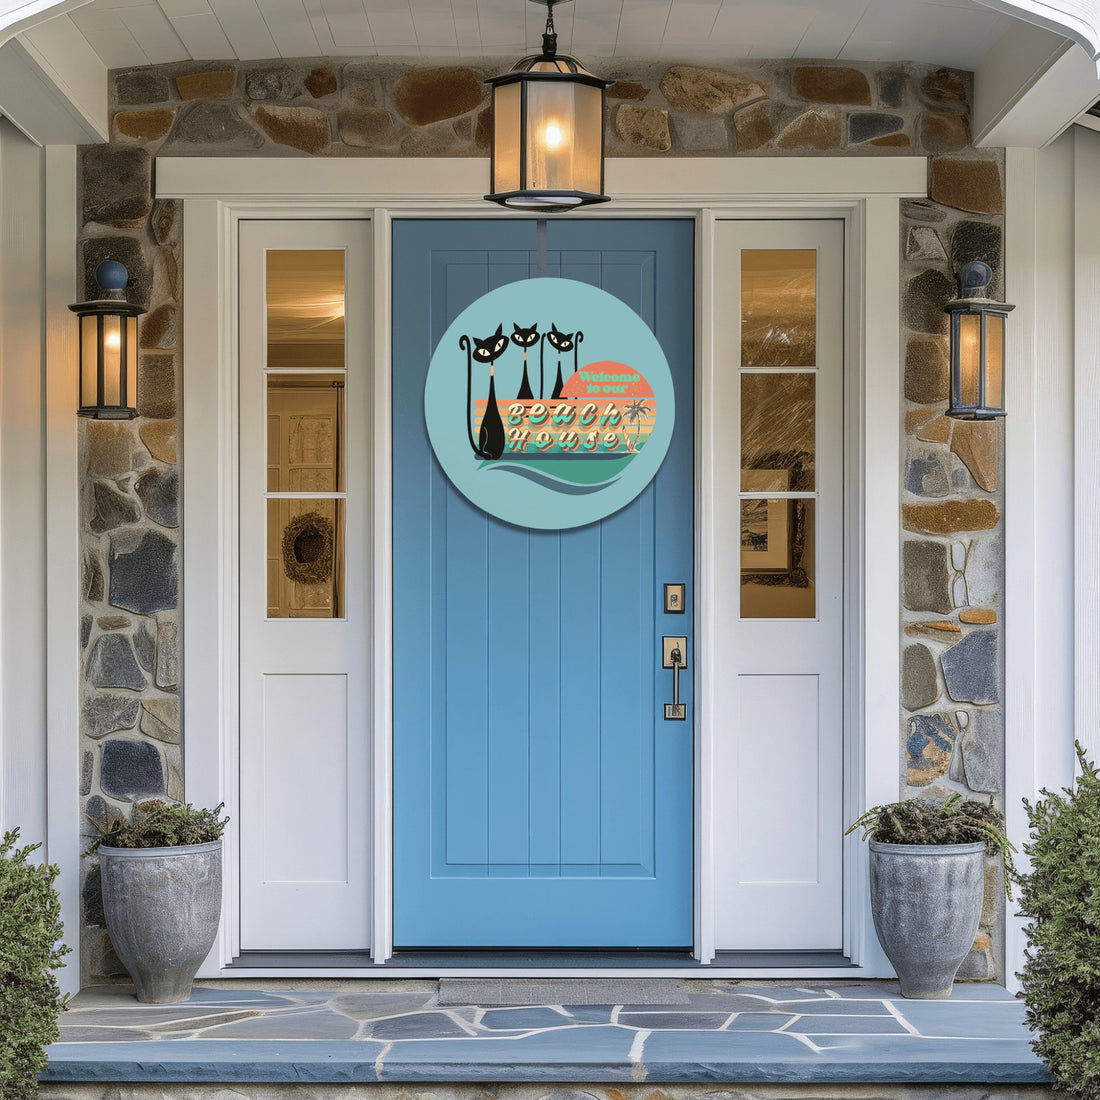 Kate McEnroe New York Retro Atomic Cat Beach House Welcome Door Sign, Mid Century Modern Wood Entry Decor 12&quot; (Round)Door HangersPMH58 - 12.2460790